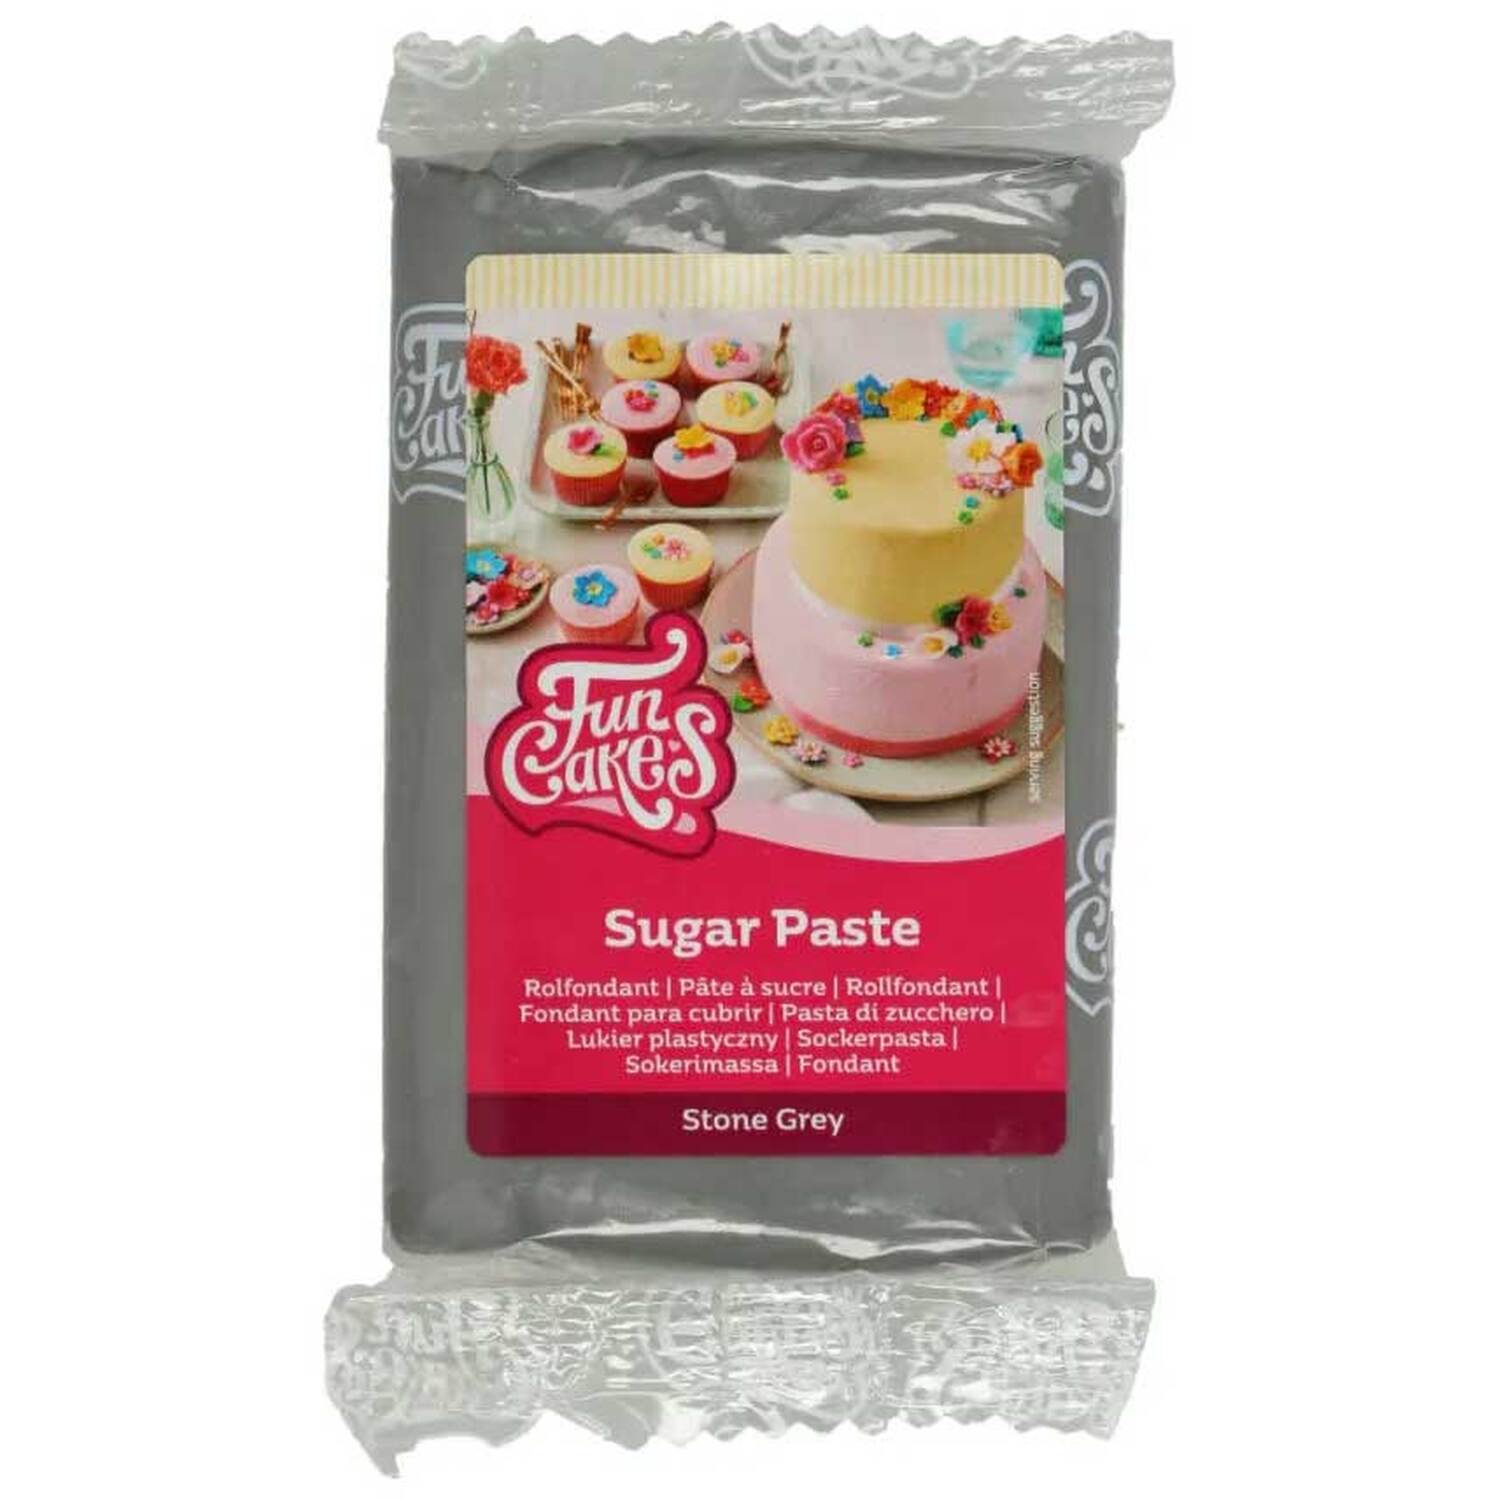 Funcakes Sugar Paste - Stone Grey Image